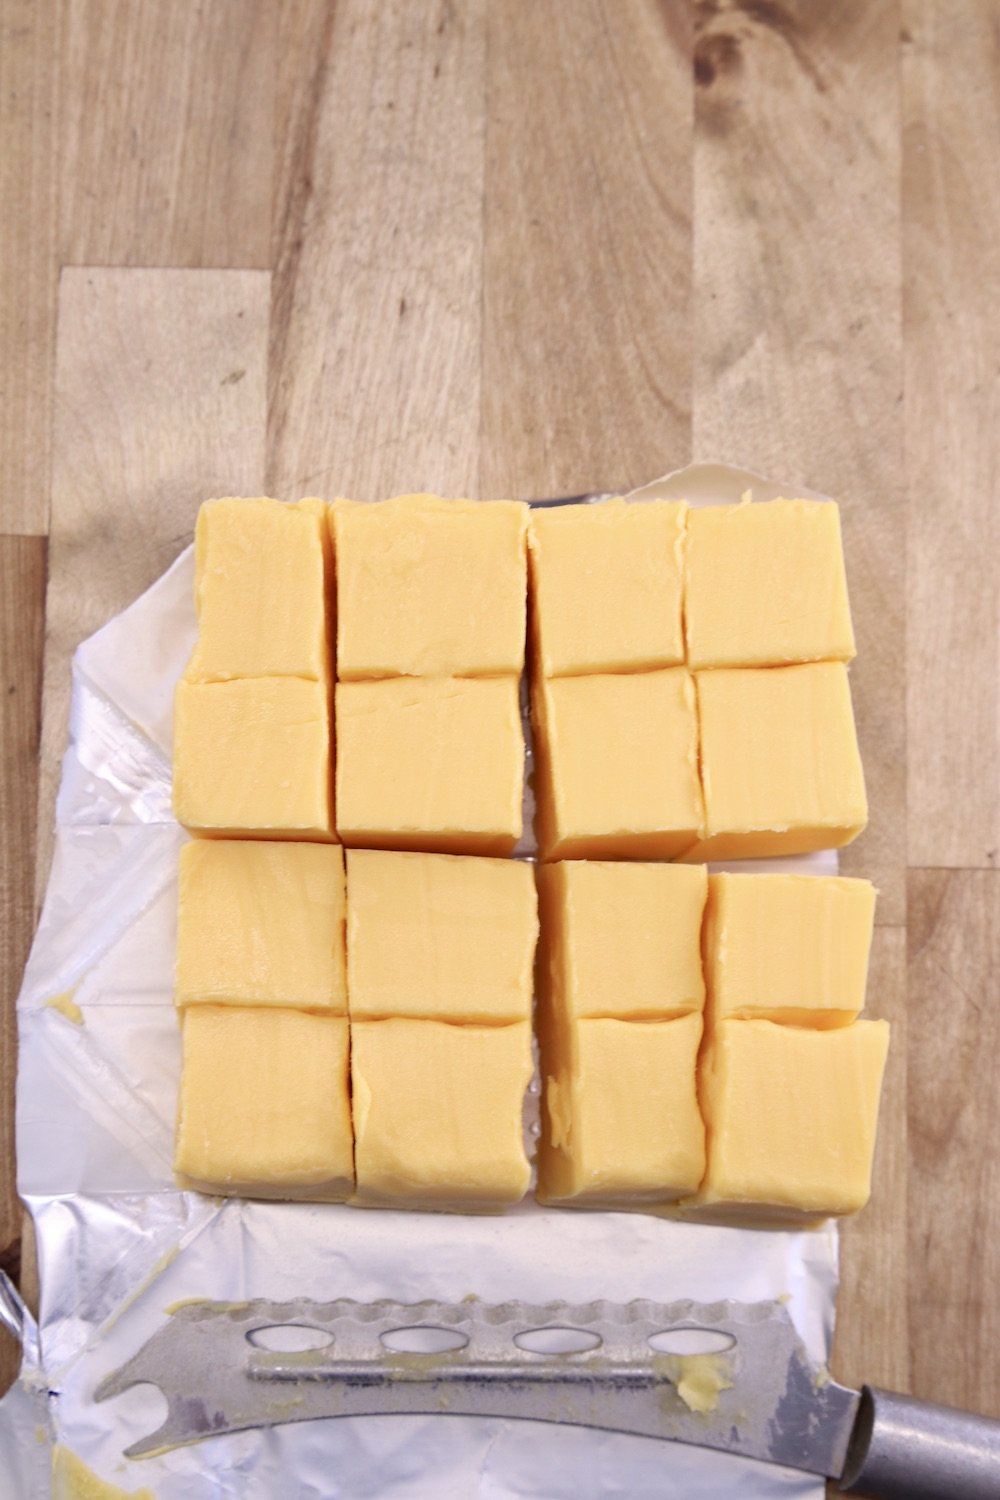 Velveeta cheese cut into chunks